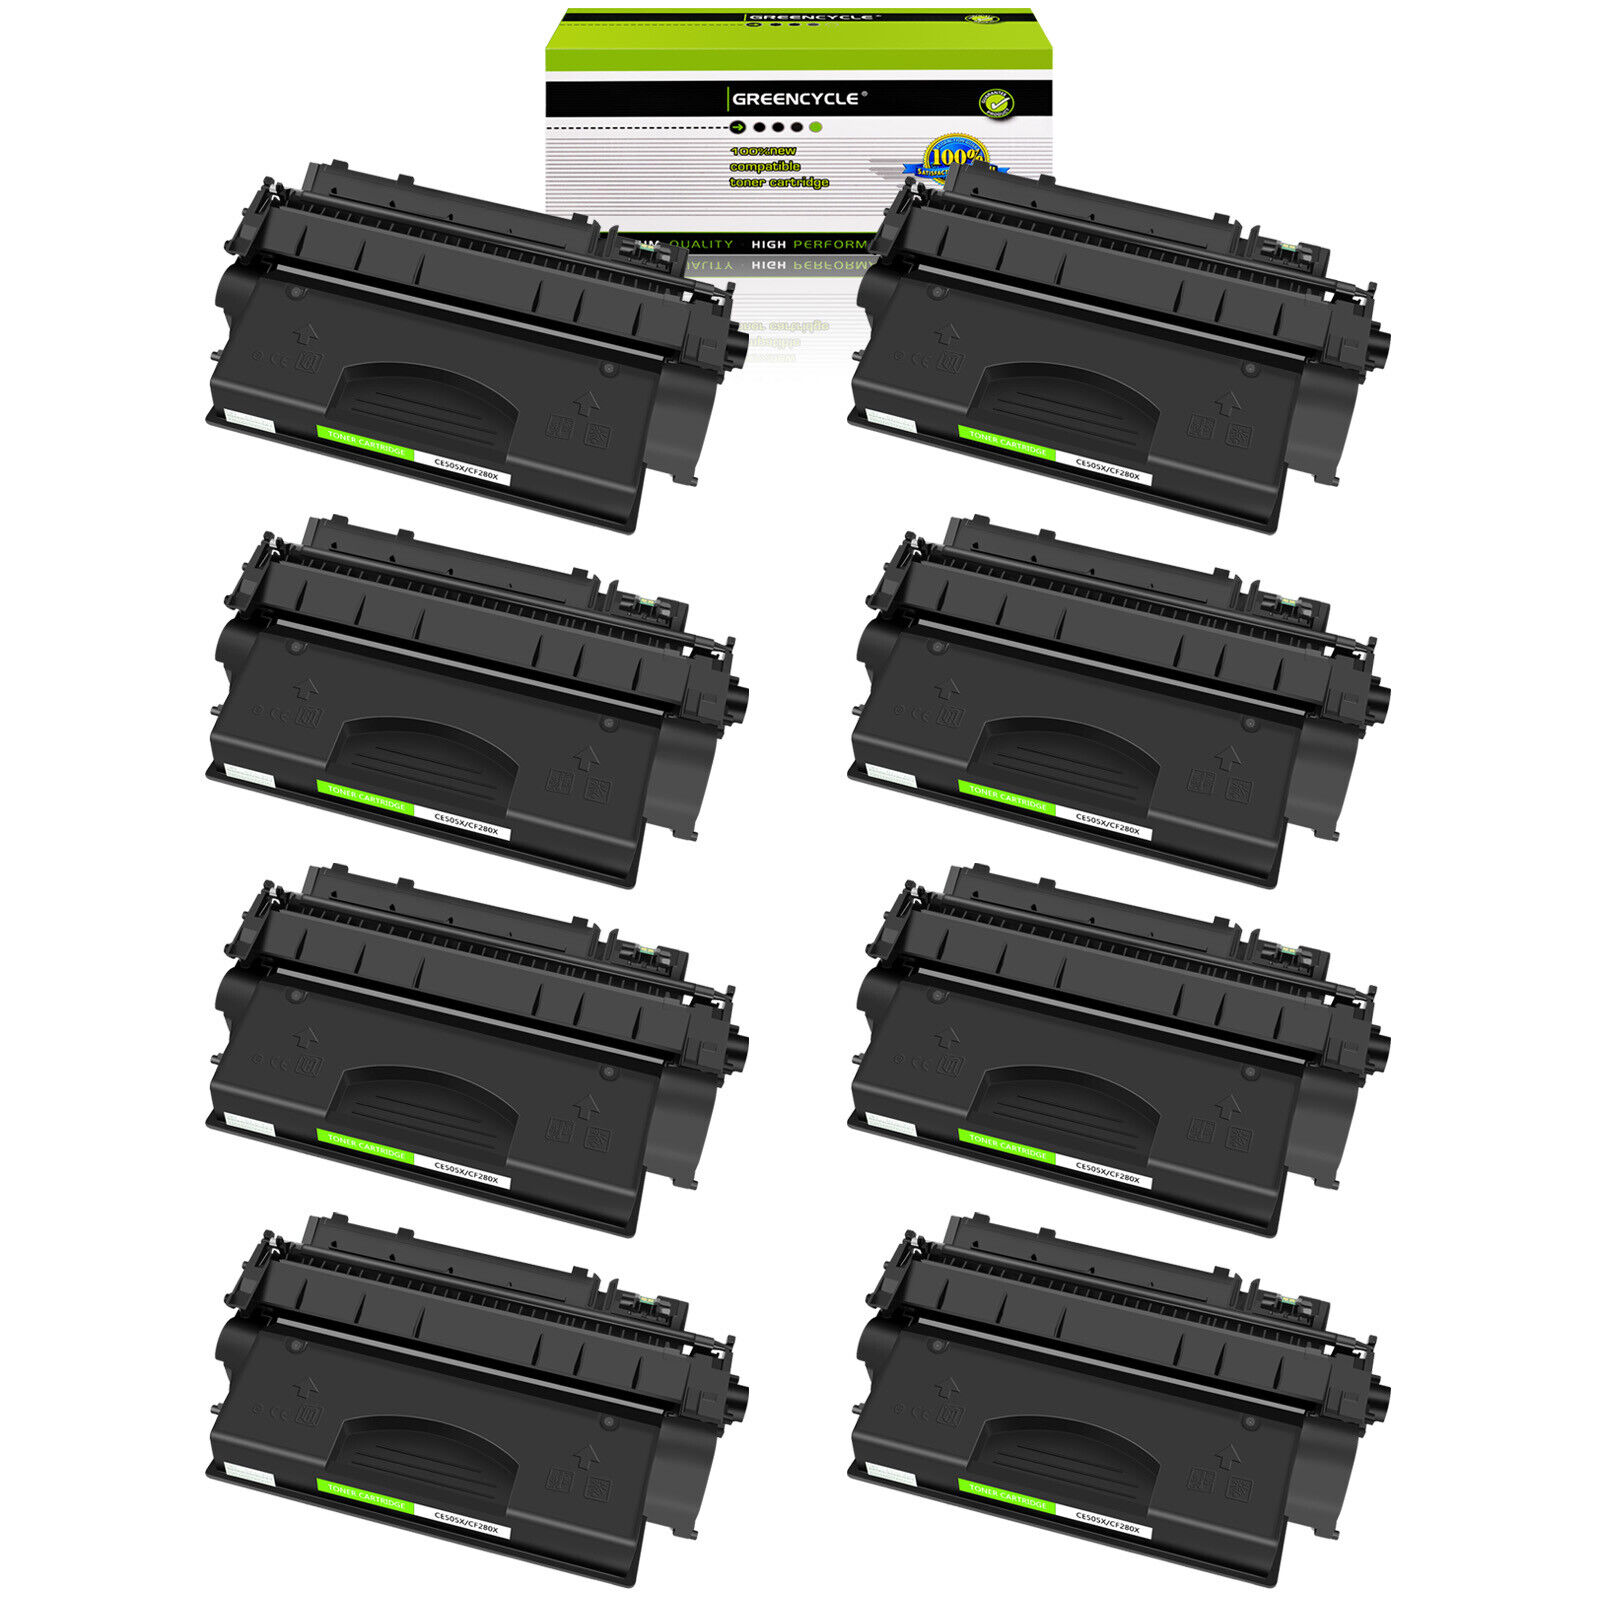 8PK CF280X High Yield Black Toner Cartridge Fits For HP LaserJet Pro 400 M401dn